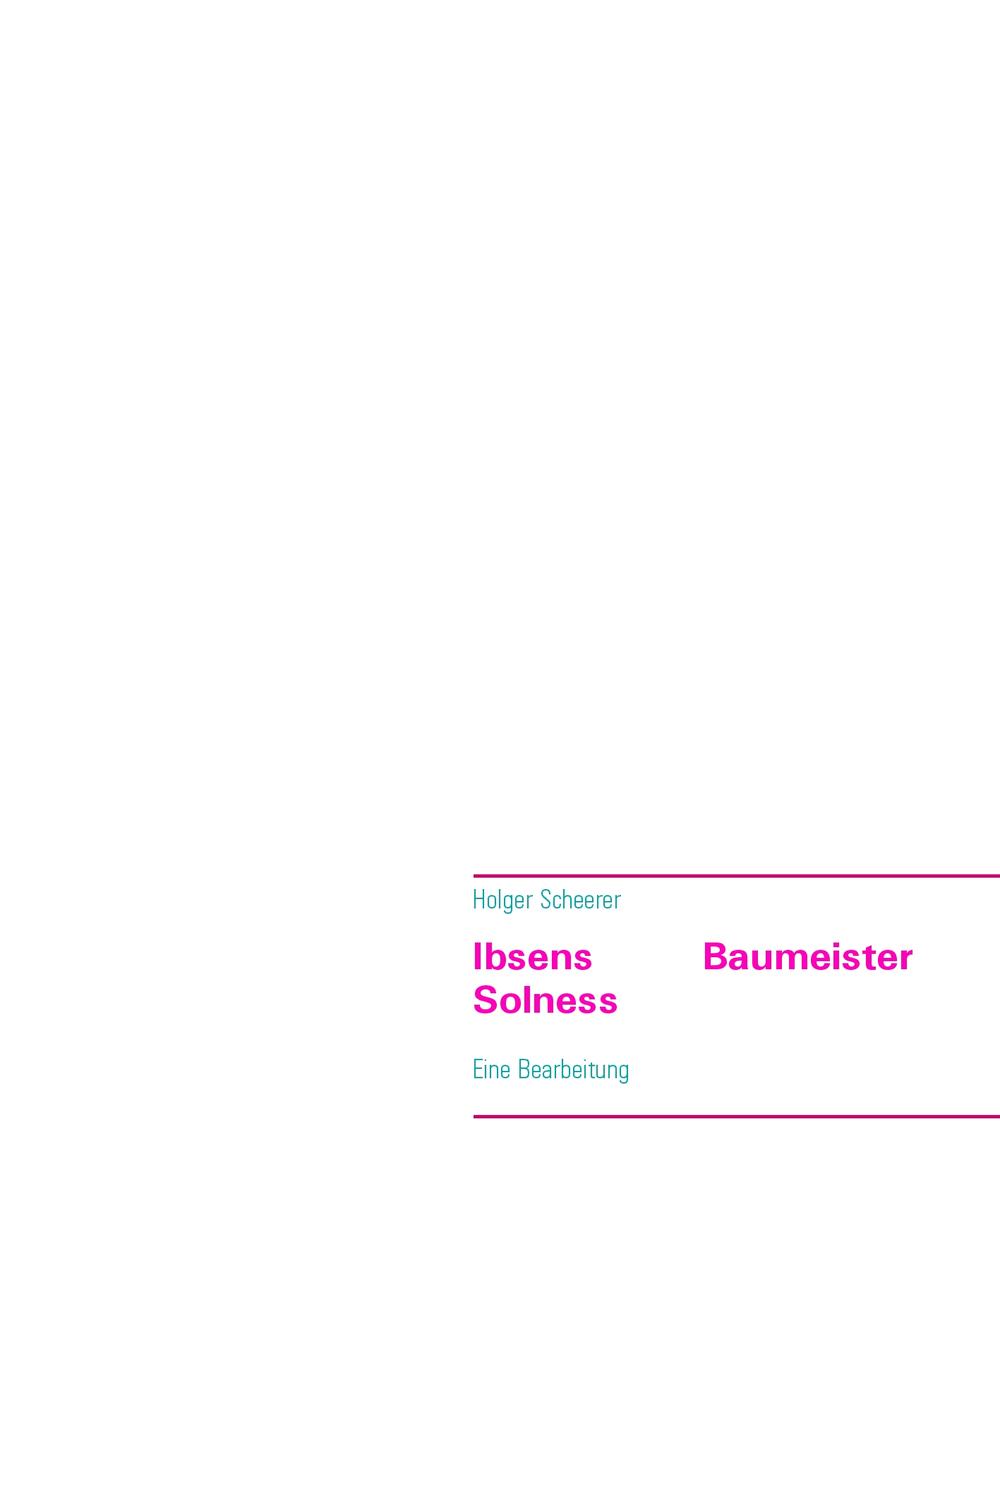 Ibsens Baumeister Solness - Holger Scheerer